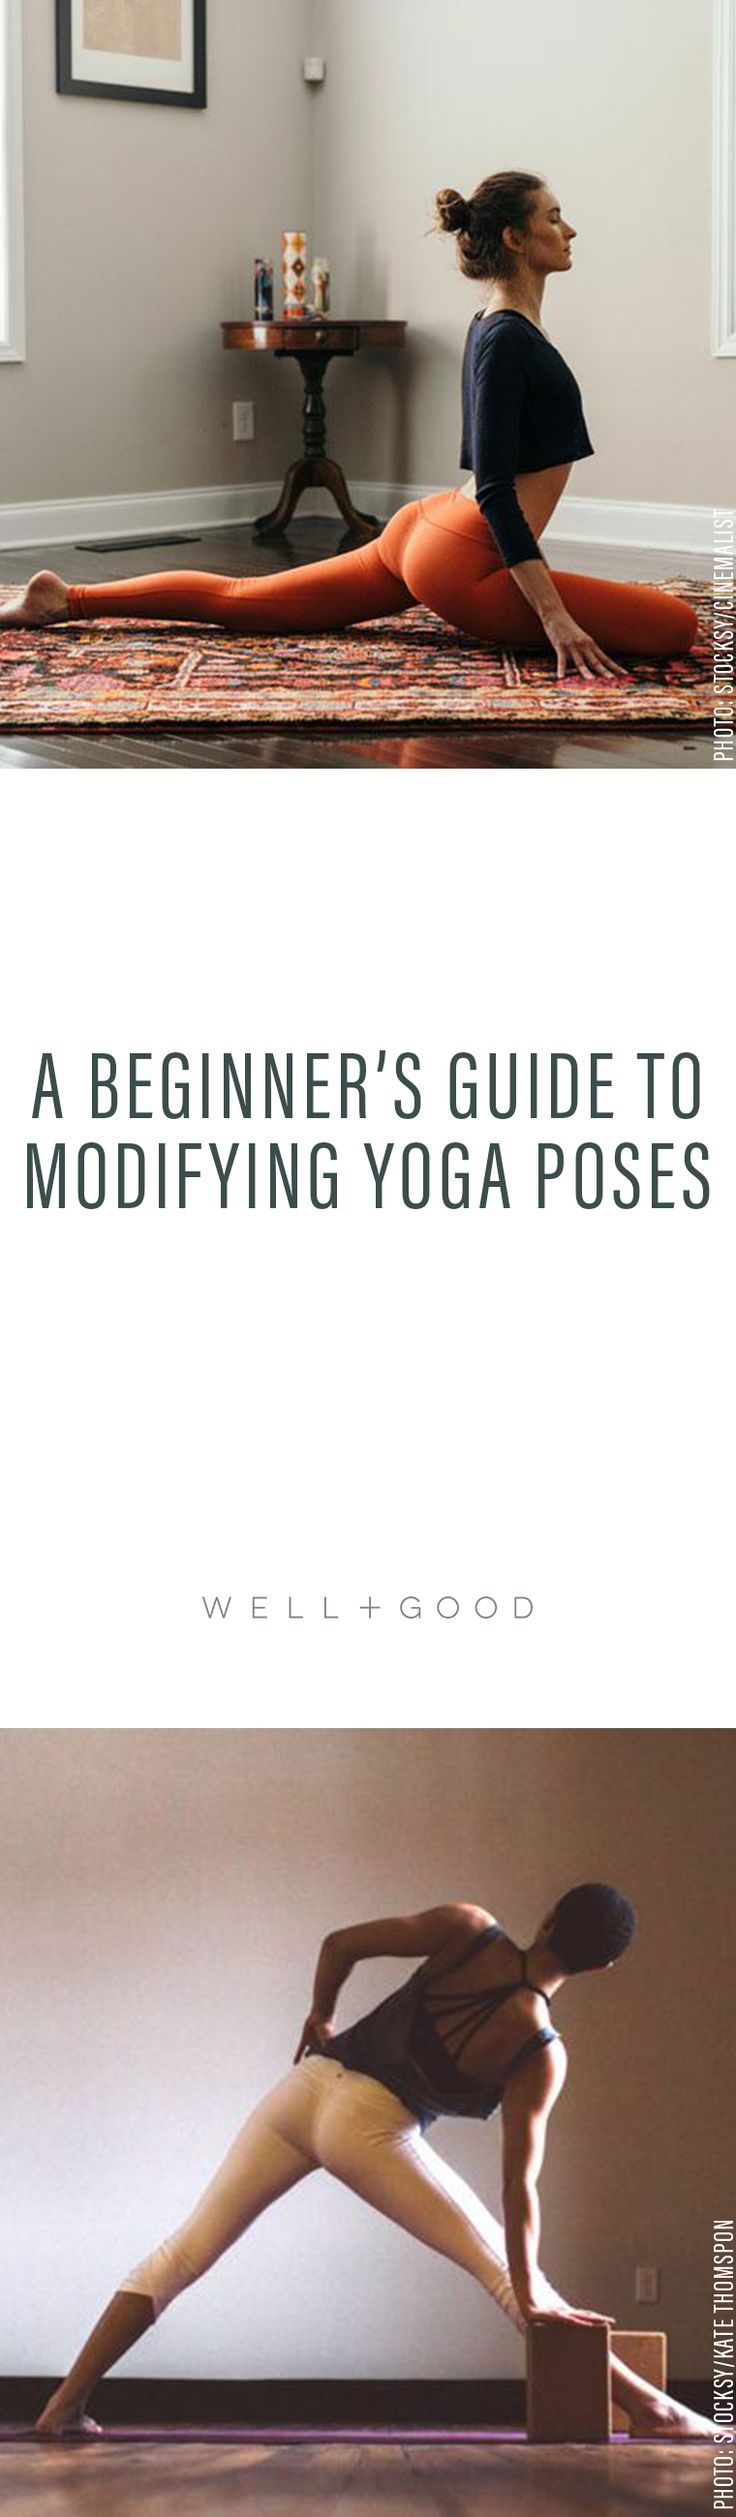 How to Modify Yoga Poses